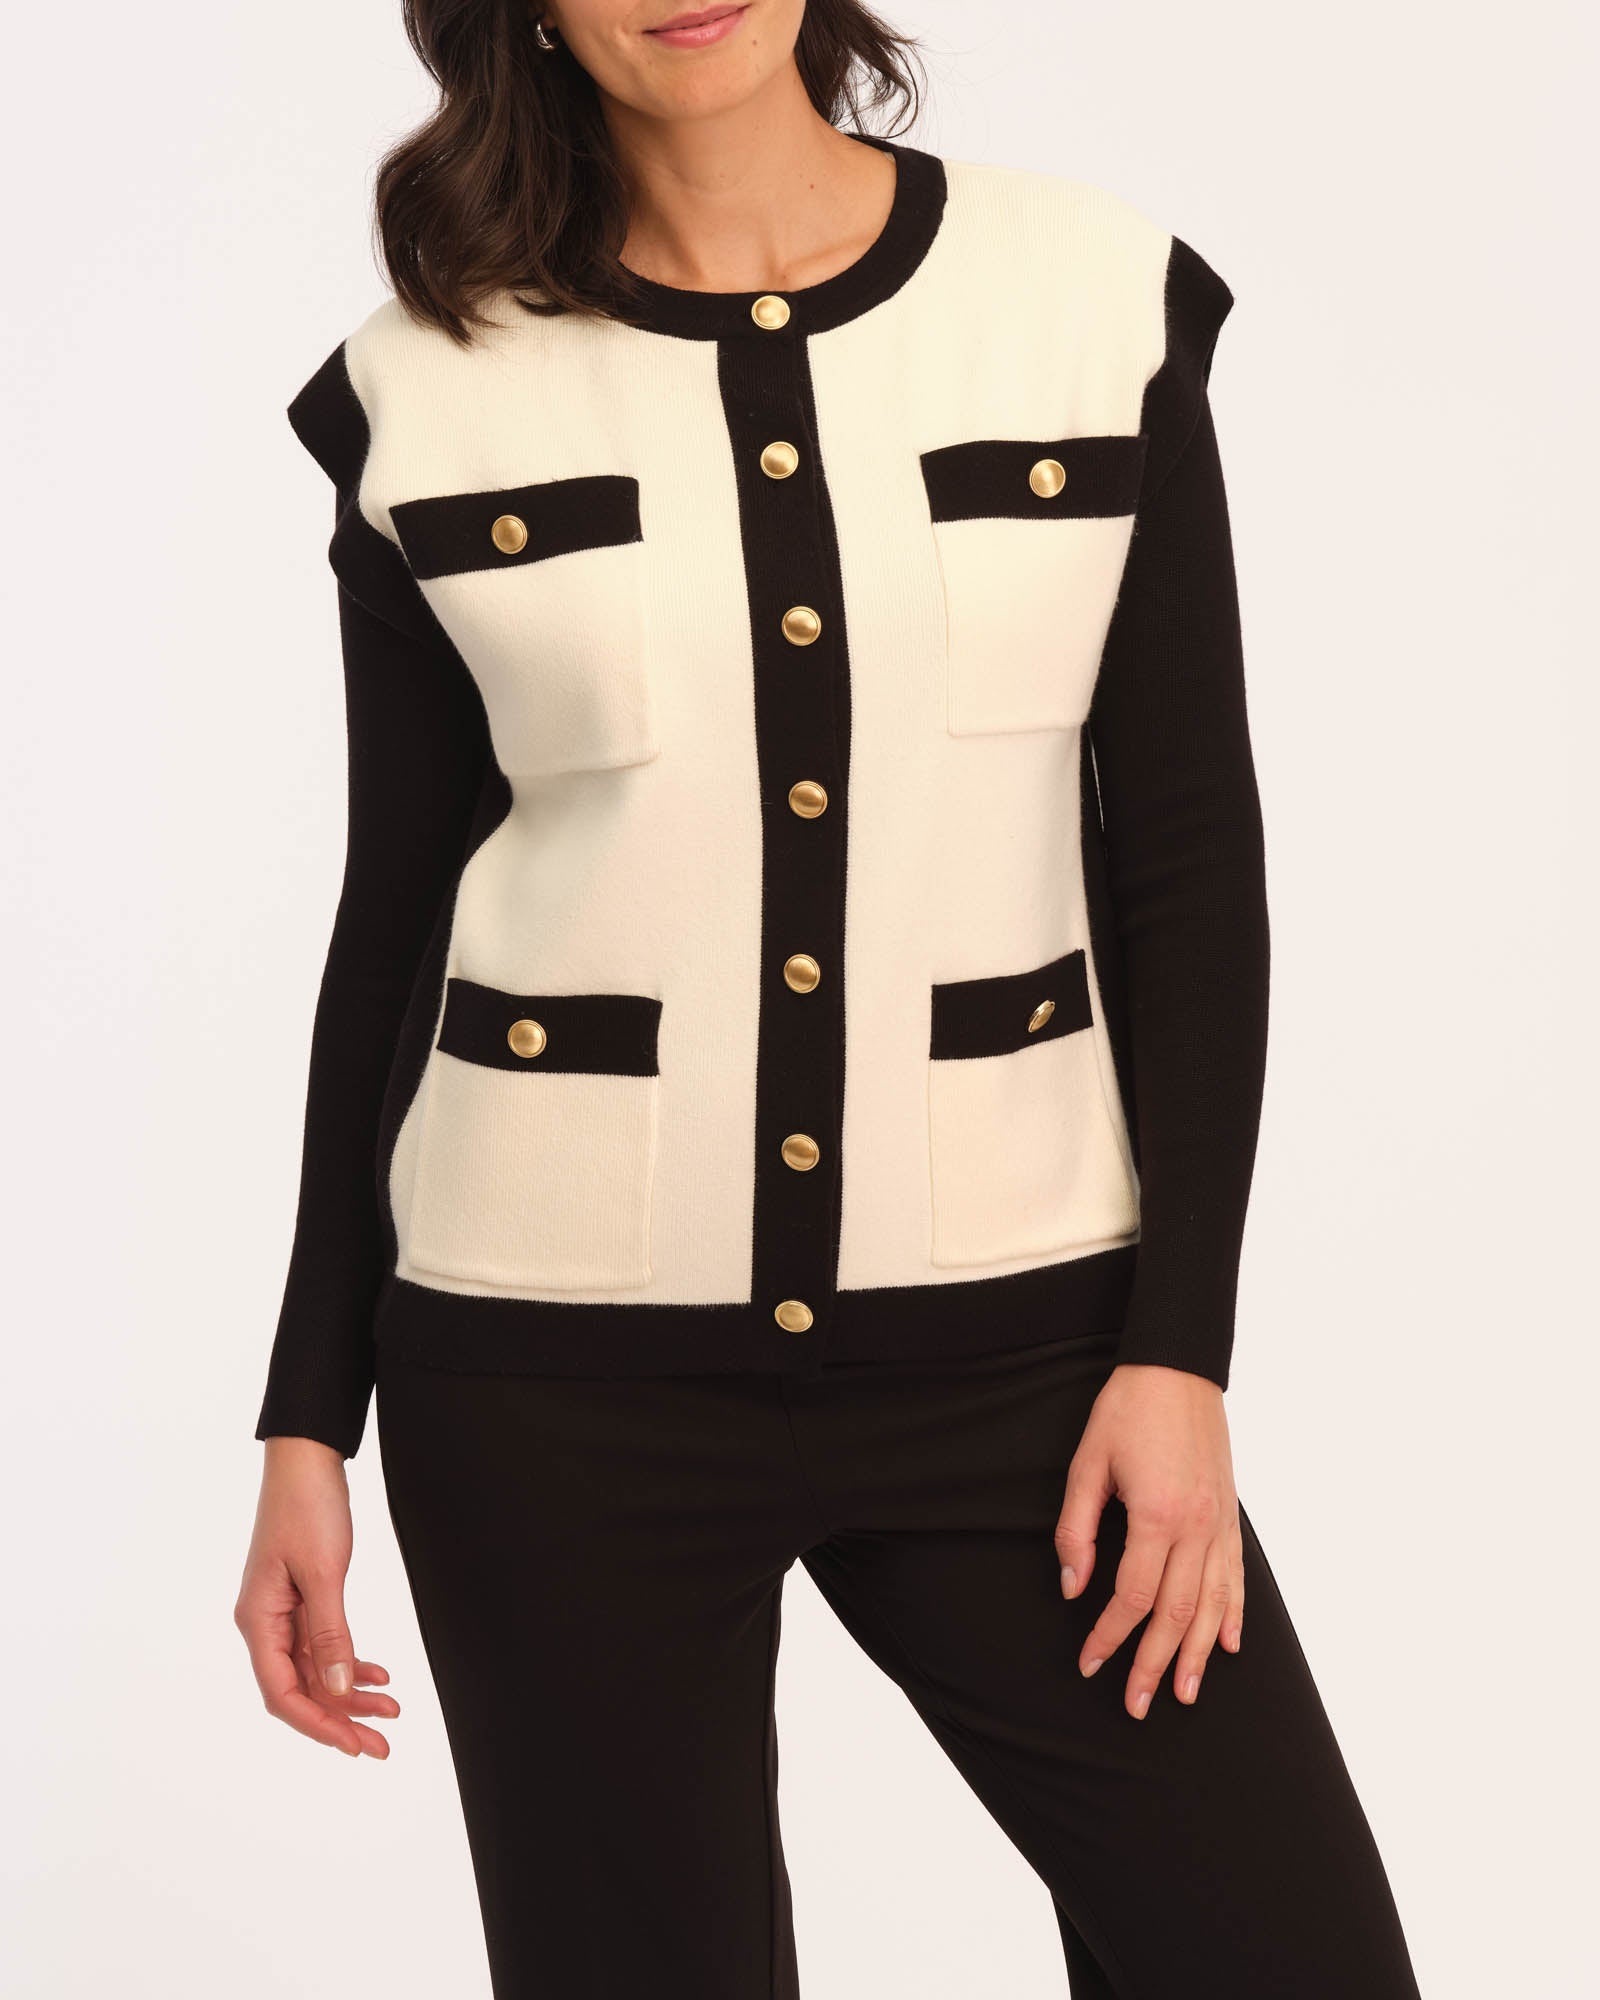 Elie Elie Tahari Women's Contrast Trim Button-Up Sweater Vest | JANE + MERCER